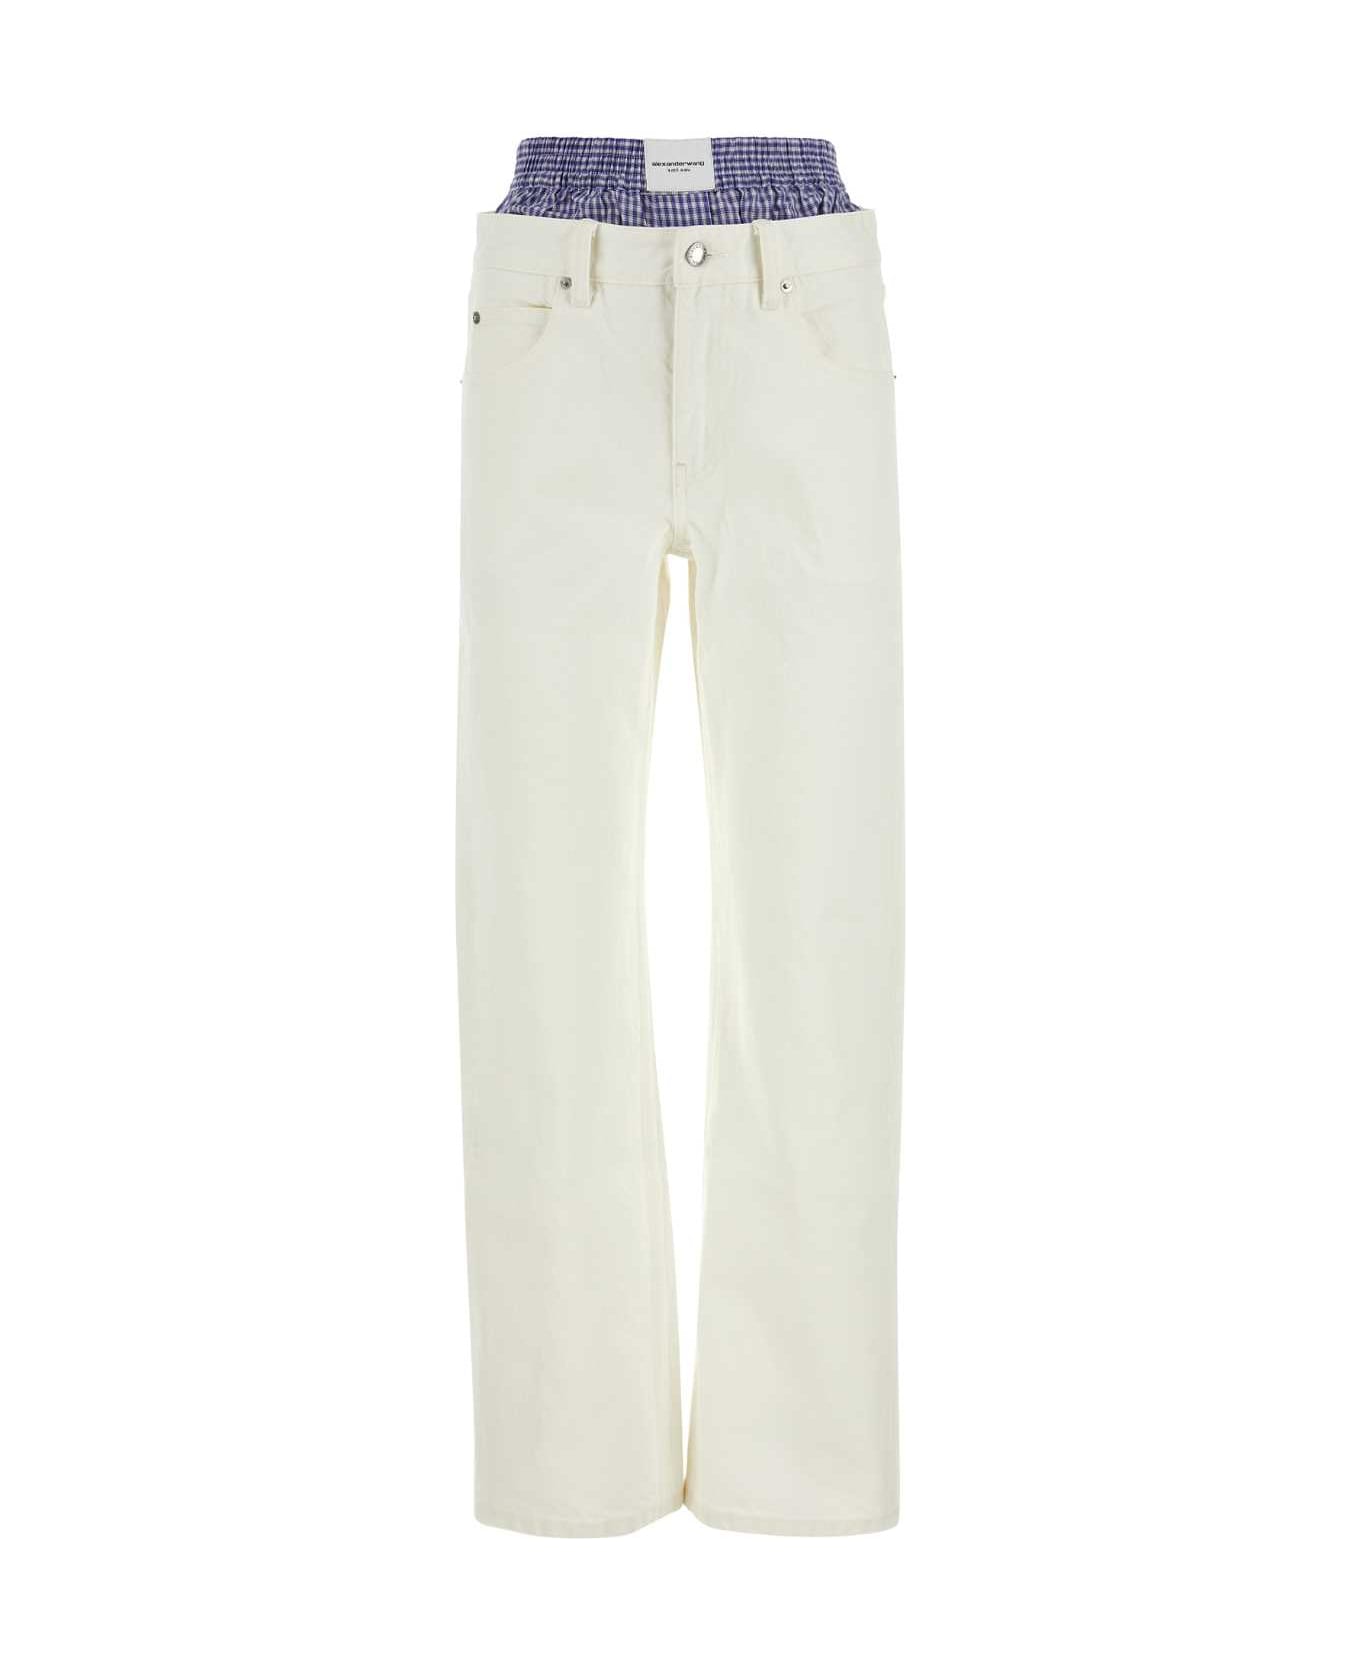 Alexander Wang Ivory Denim Jeans - MOONSHINE